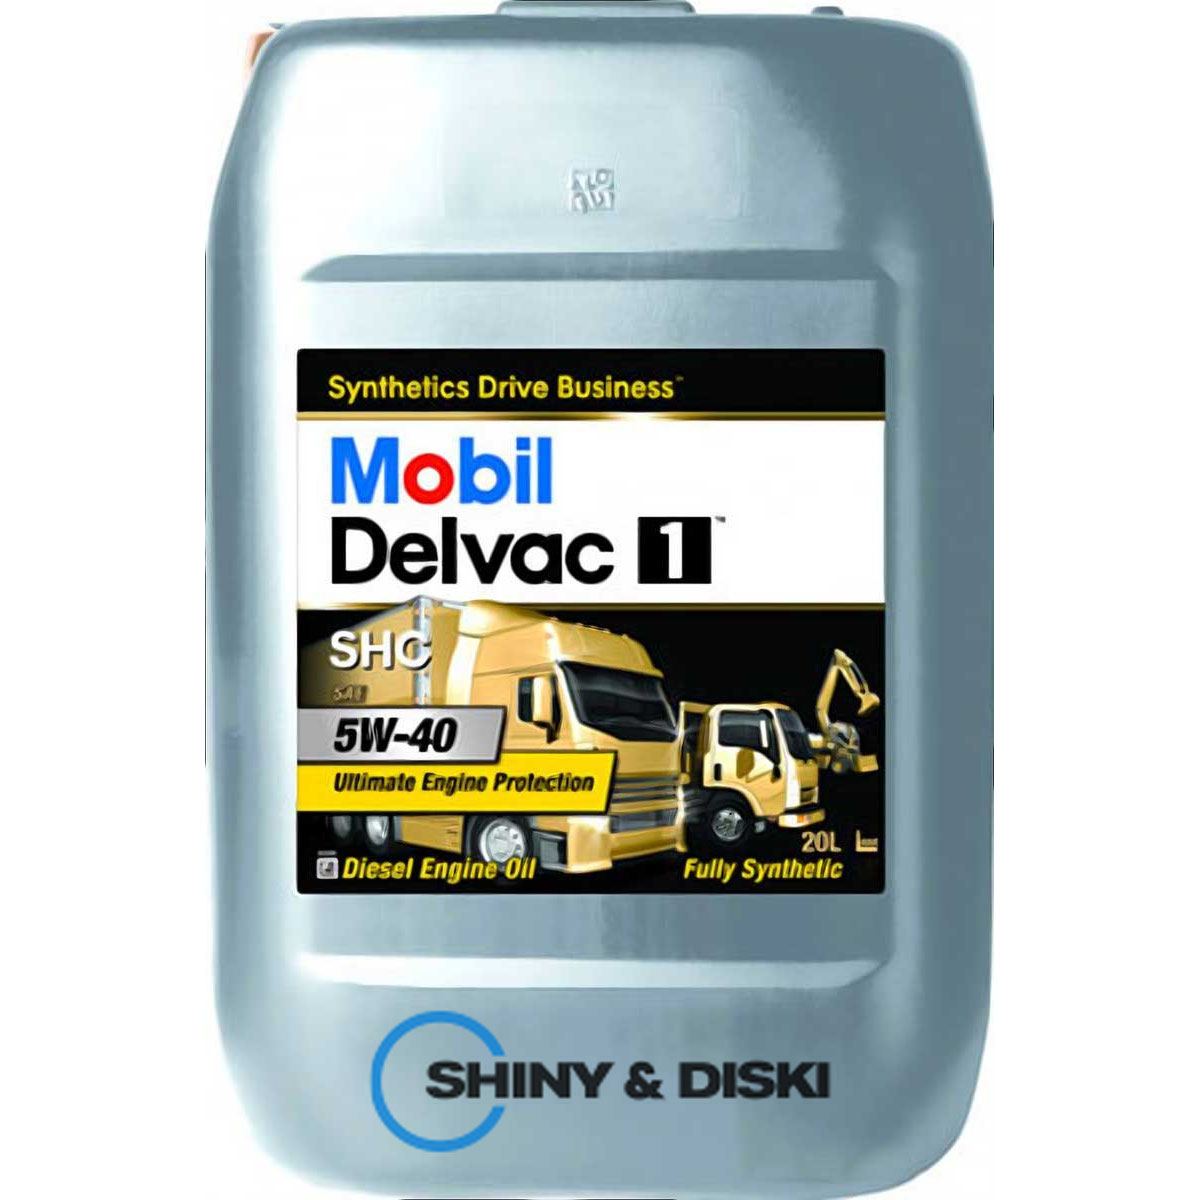 mobil delvac 1 shc 5w-40 (20л)